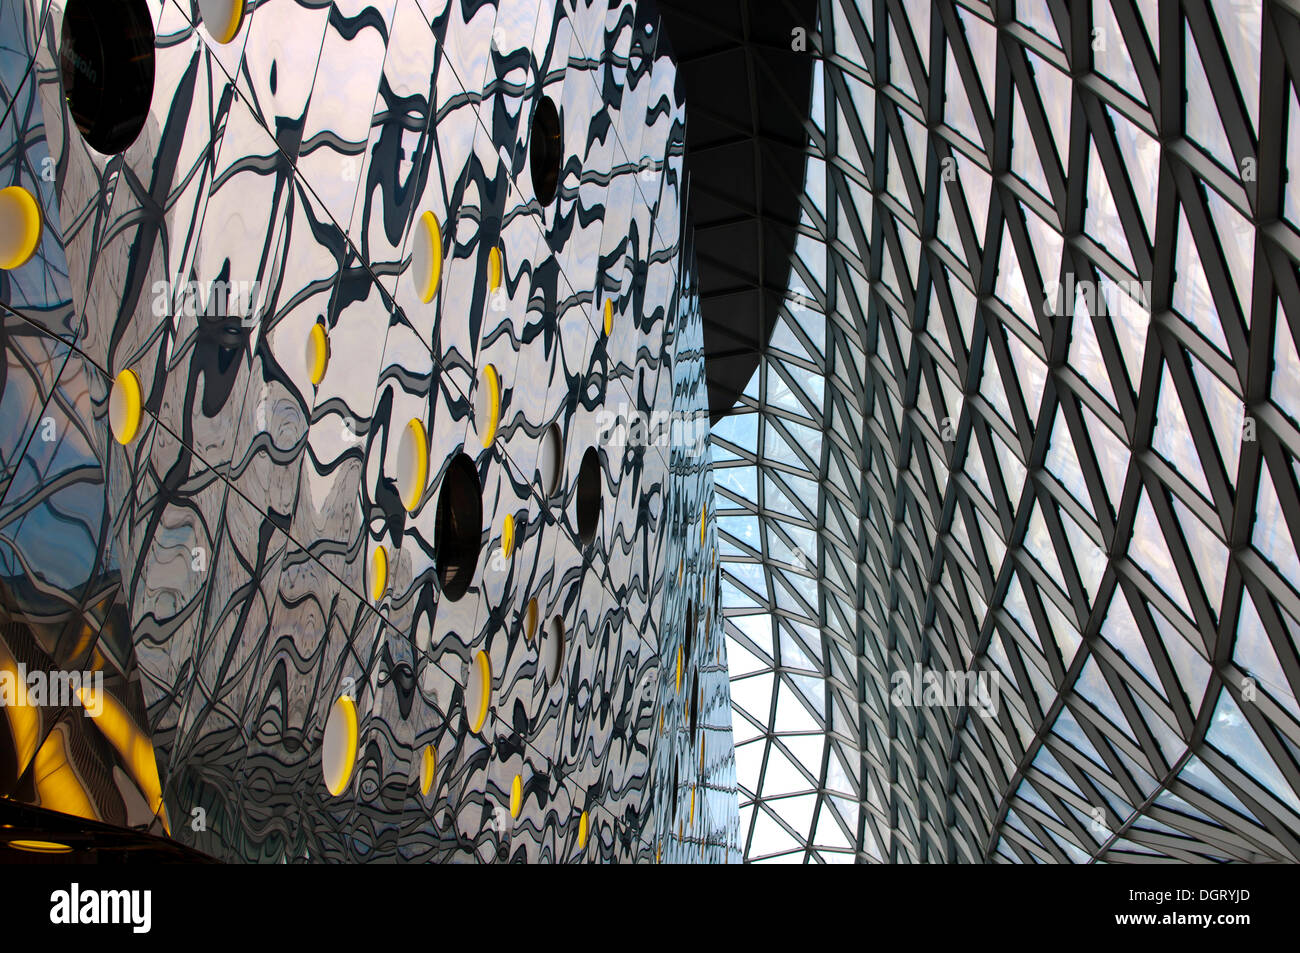 Dettagli architettonici, Myzeil shopping centre, Frankfurt am Main, Hesse Foto Stock